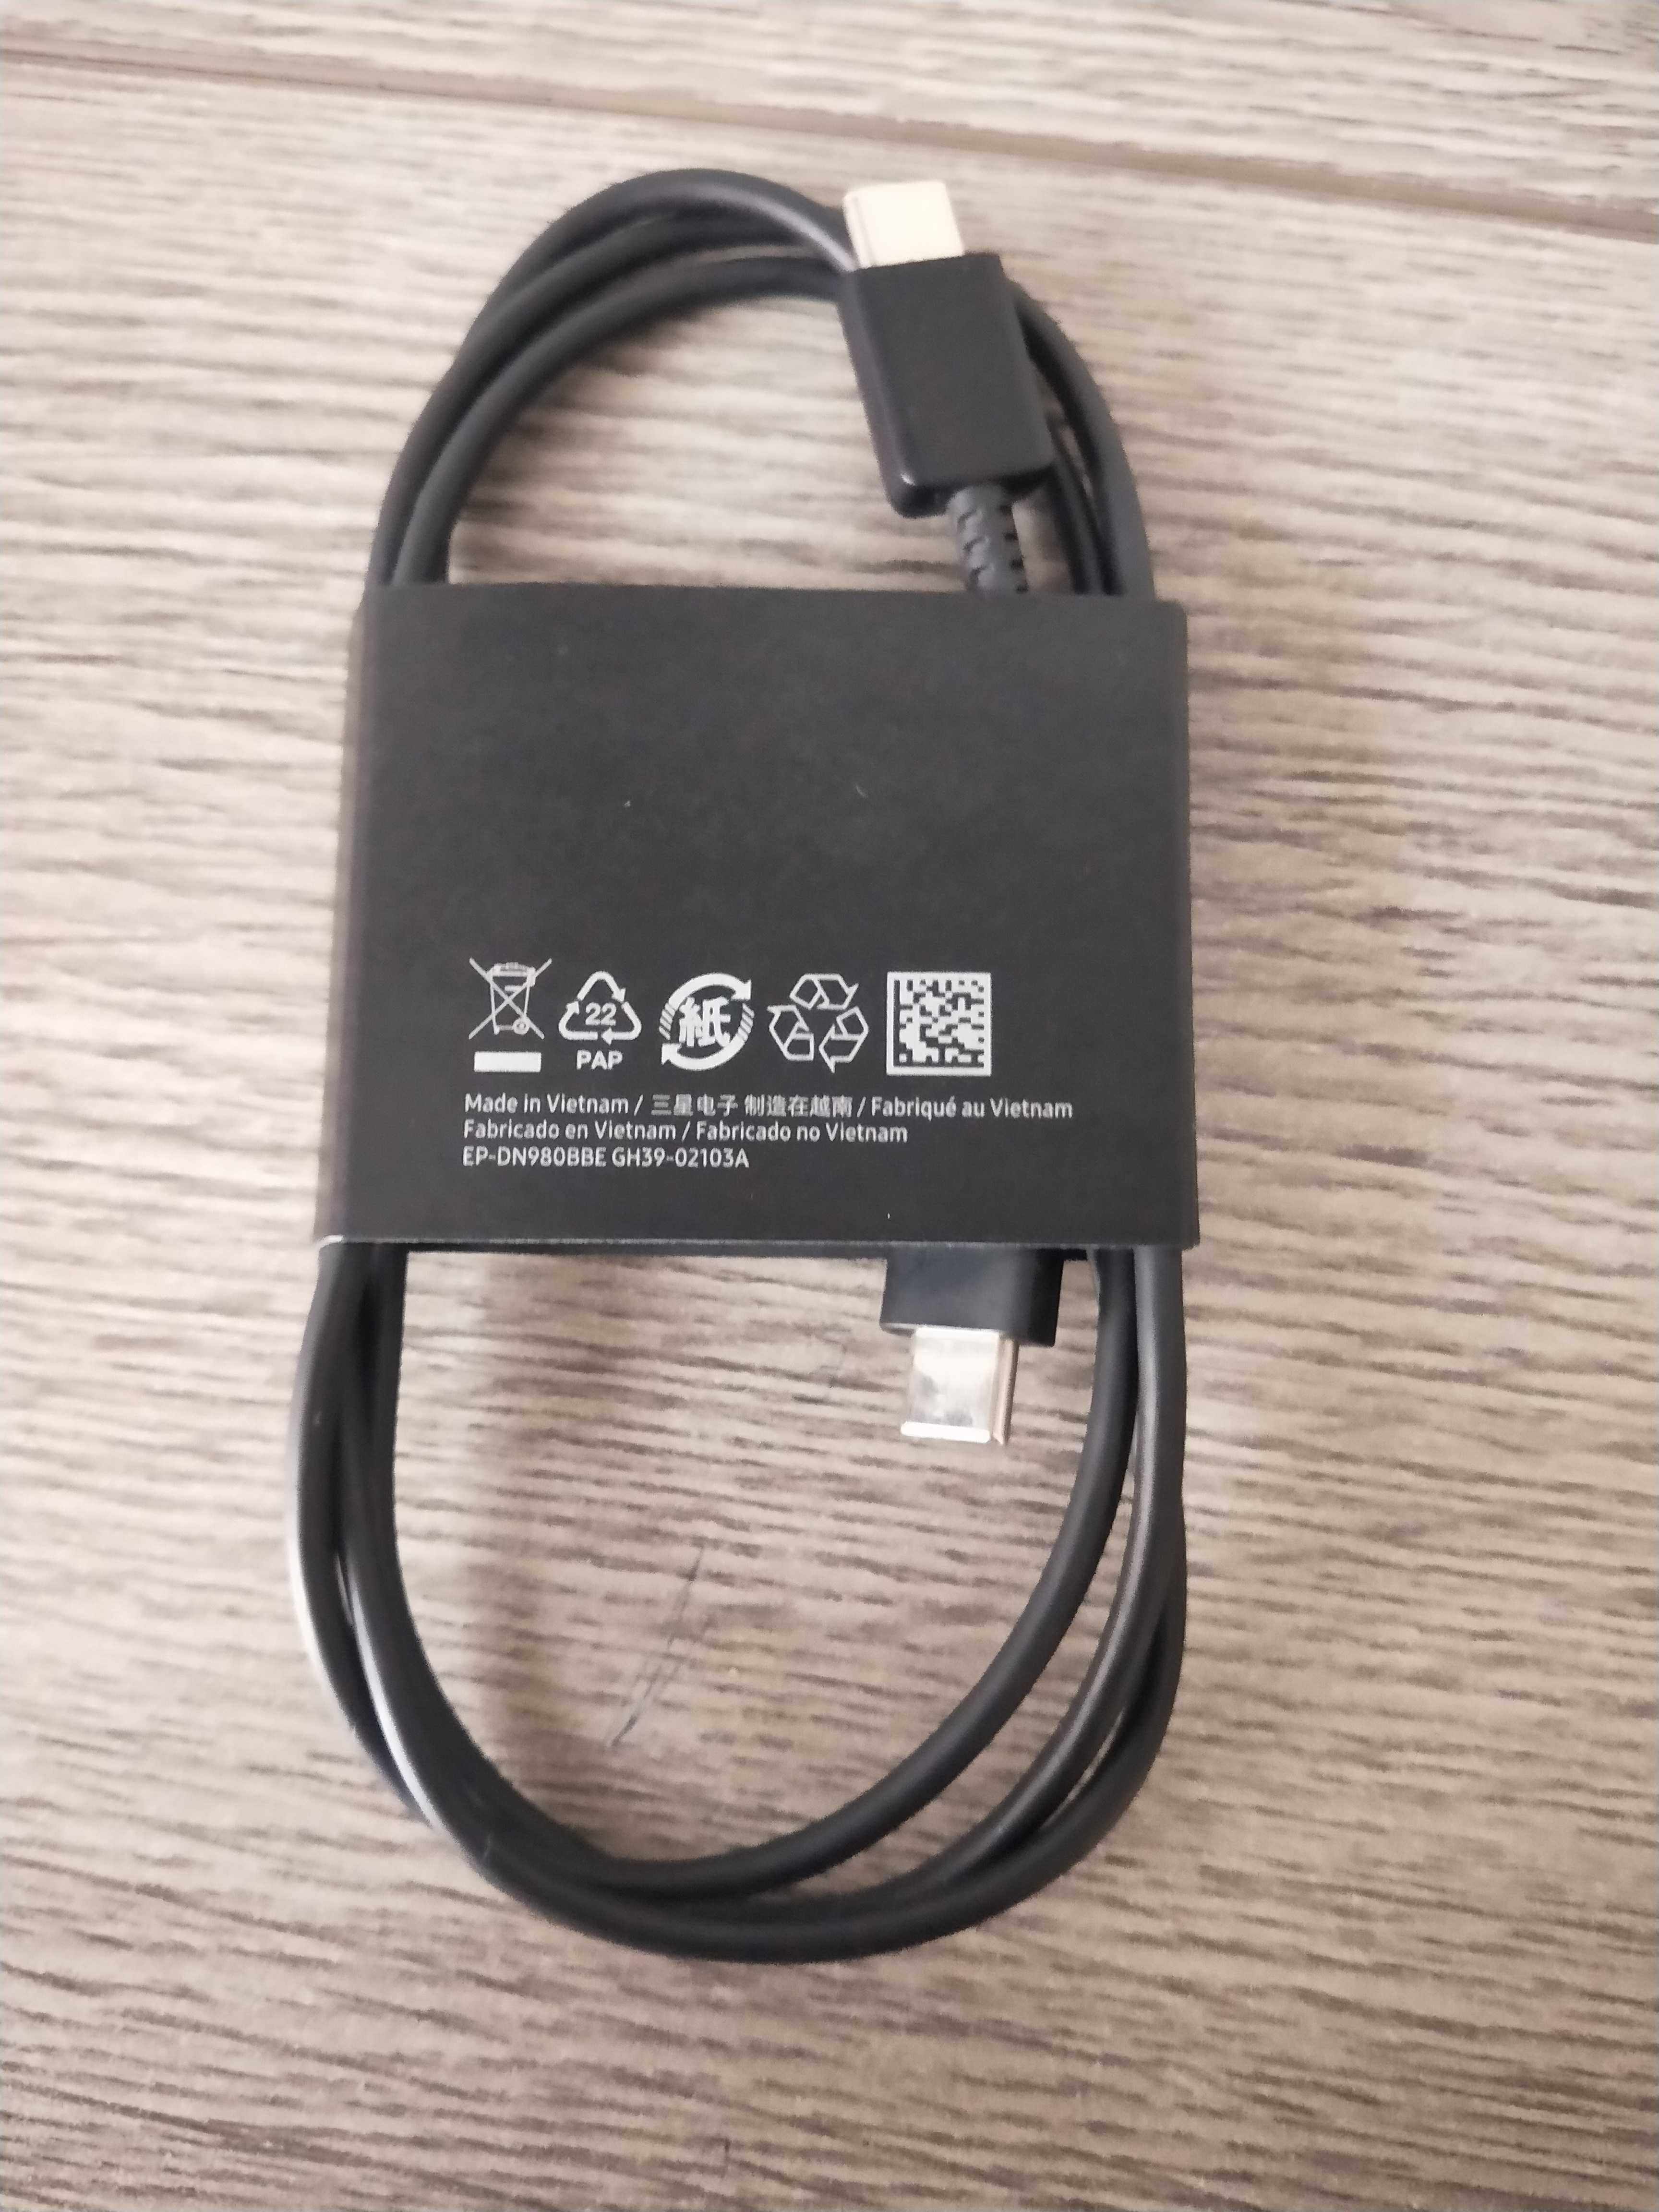 Samsung cable кабель type-c EP-DN980BBE GH39-о21о3A оригинал.